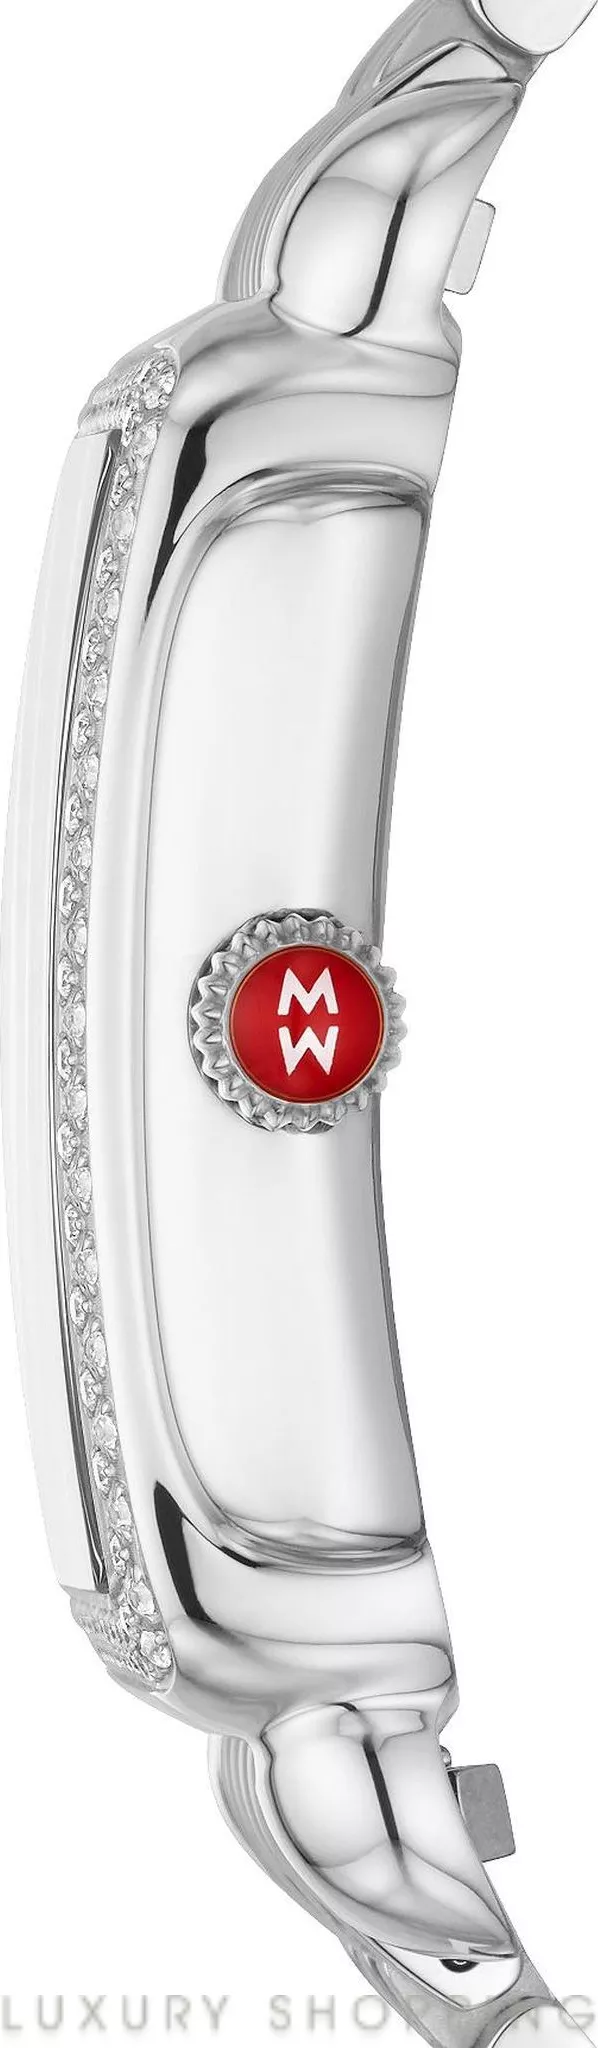 Michele Deco Park Diamond Watch 26.5mm x 37mm